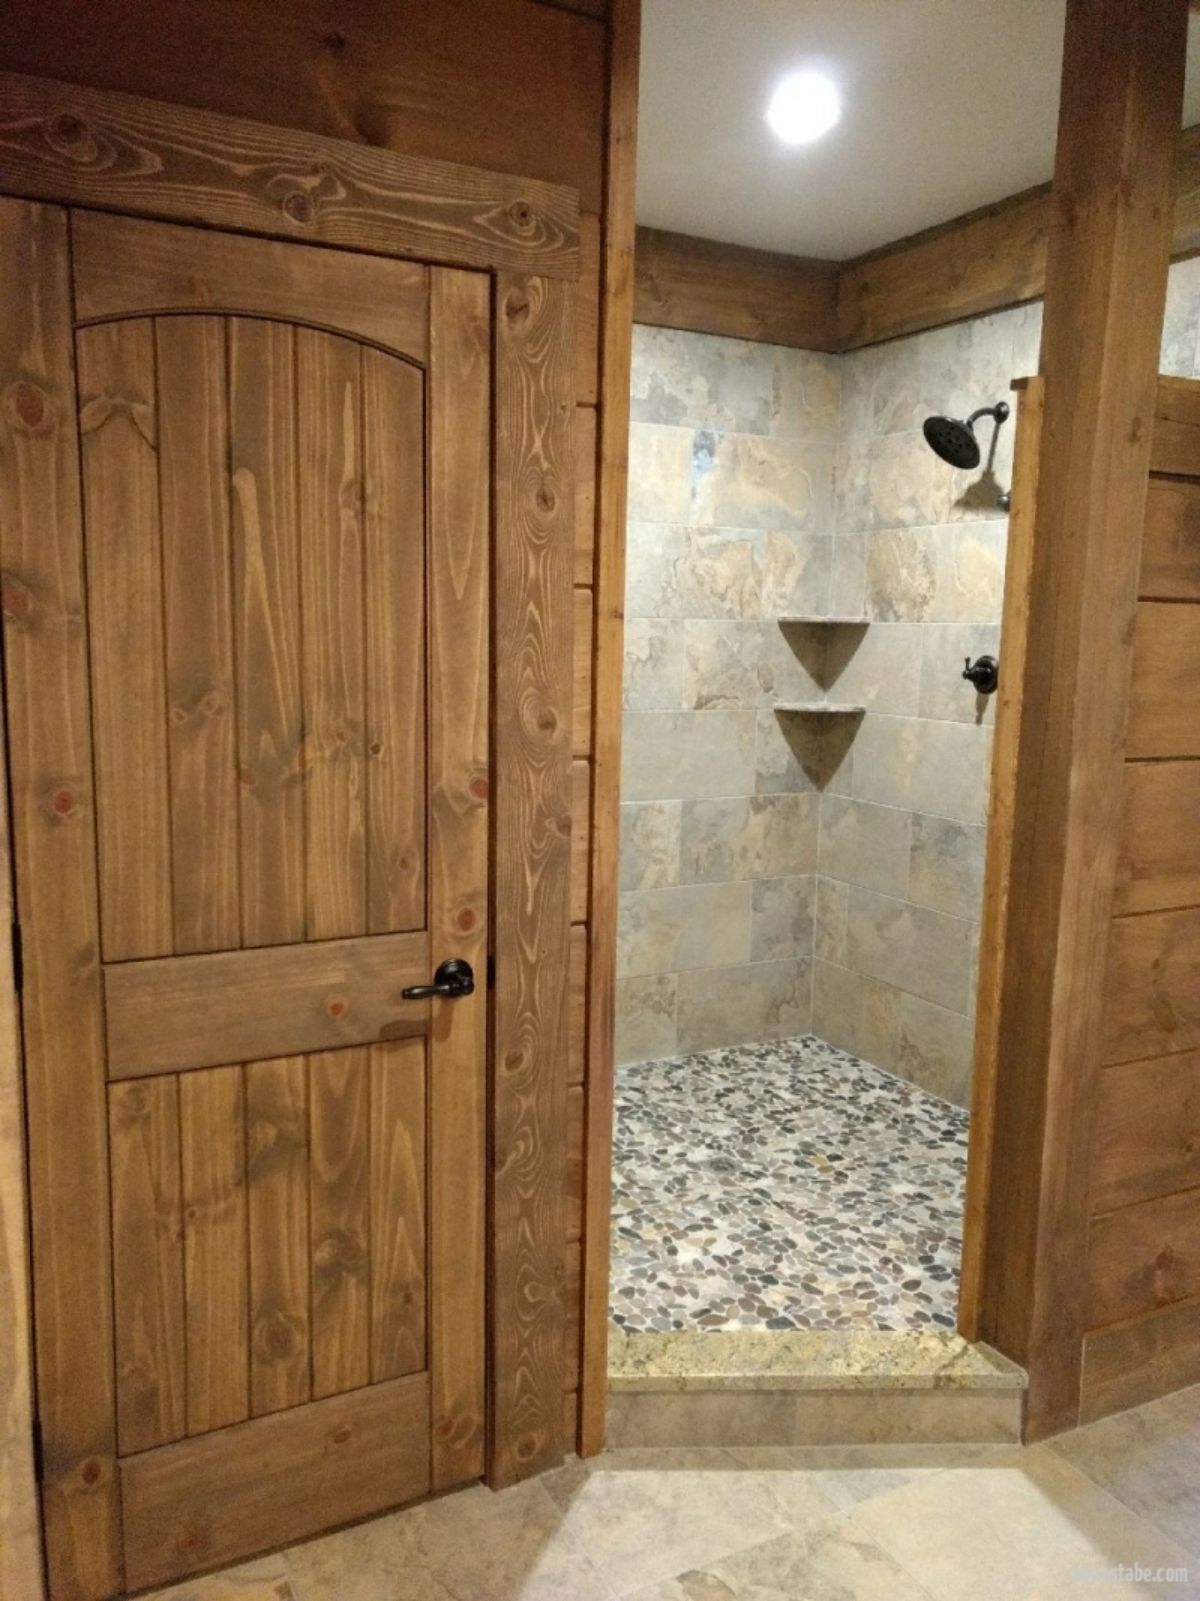 tiled shower in the corner of bathroom